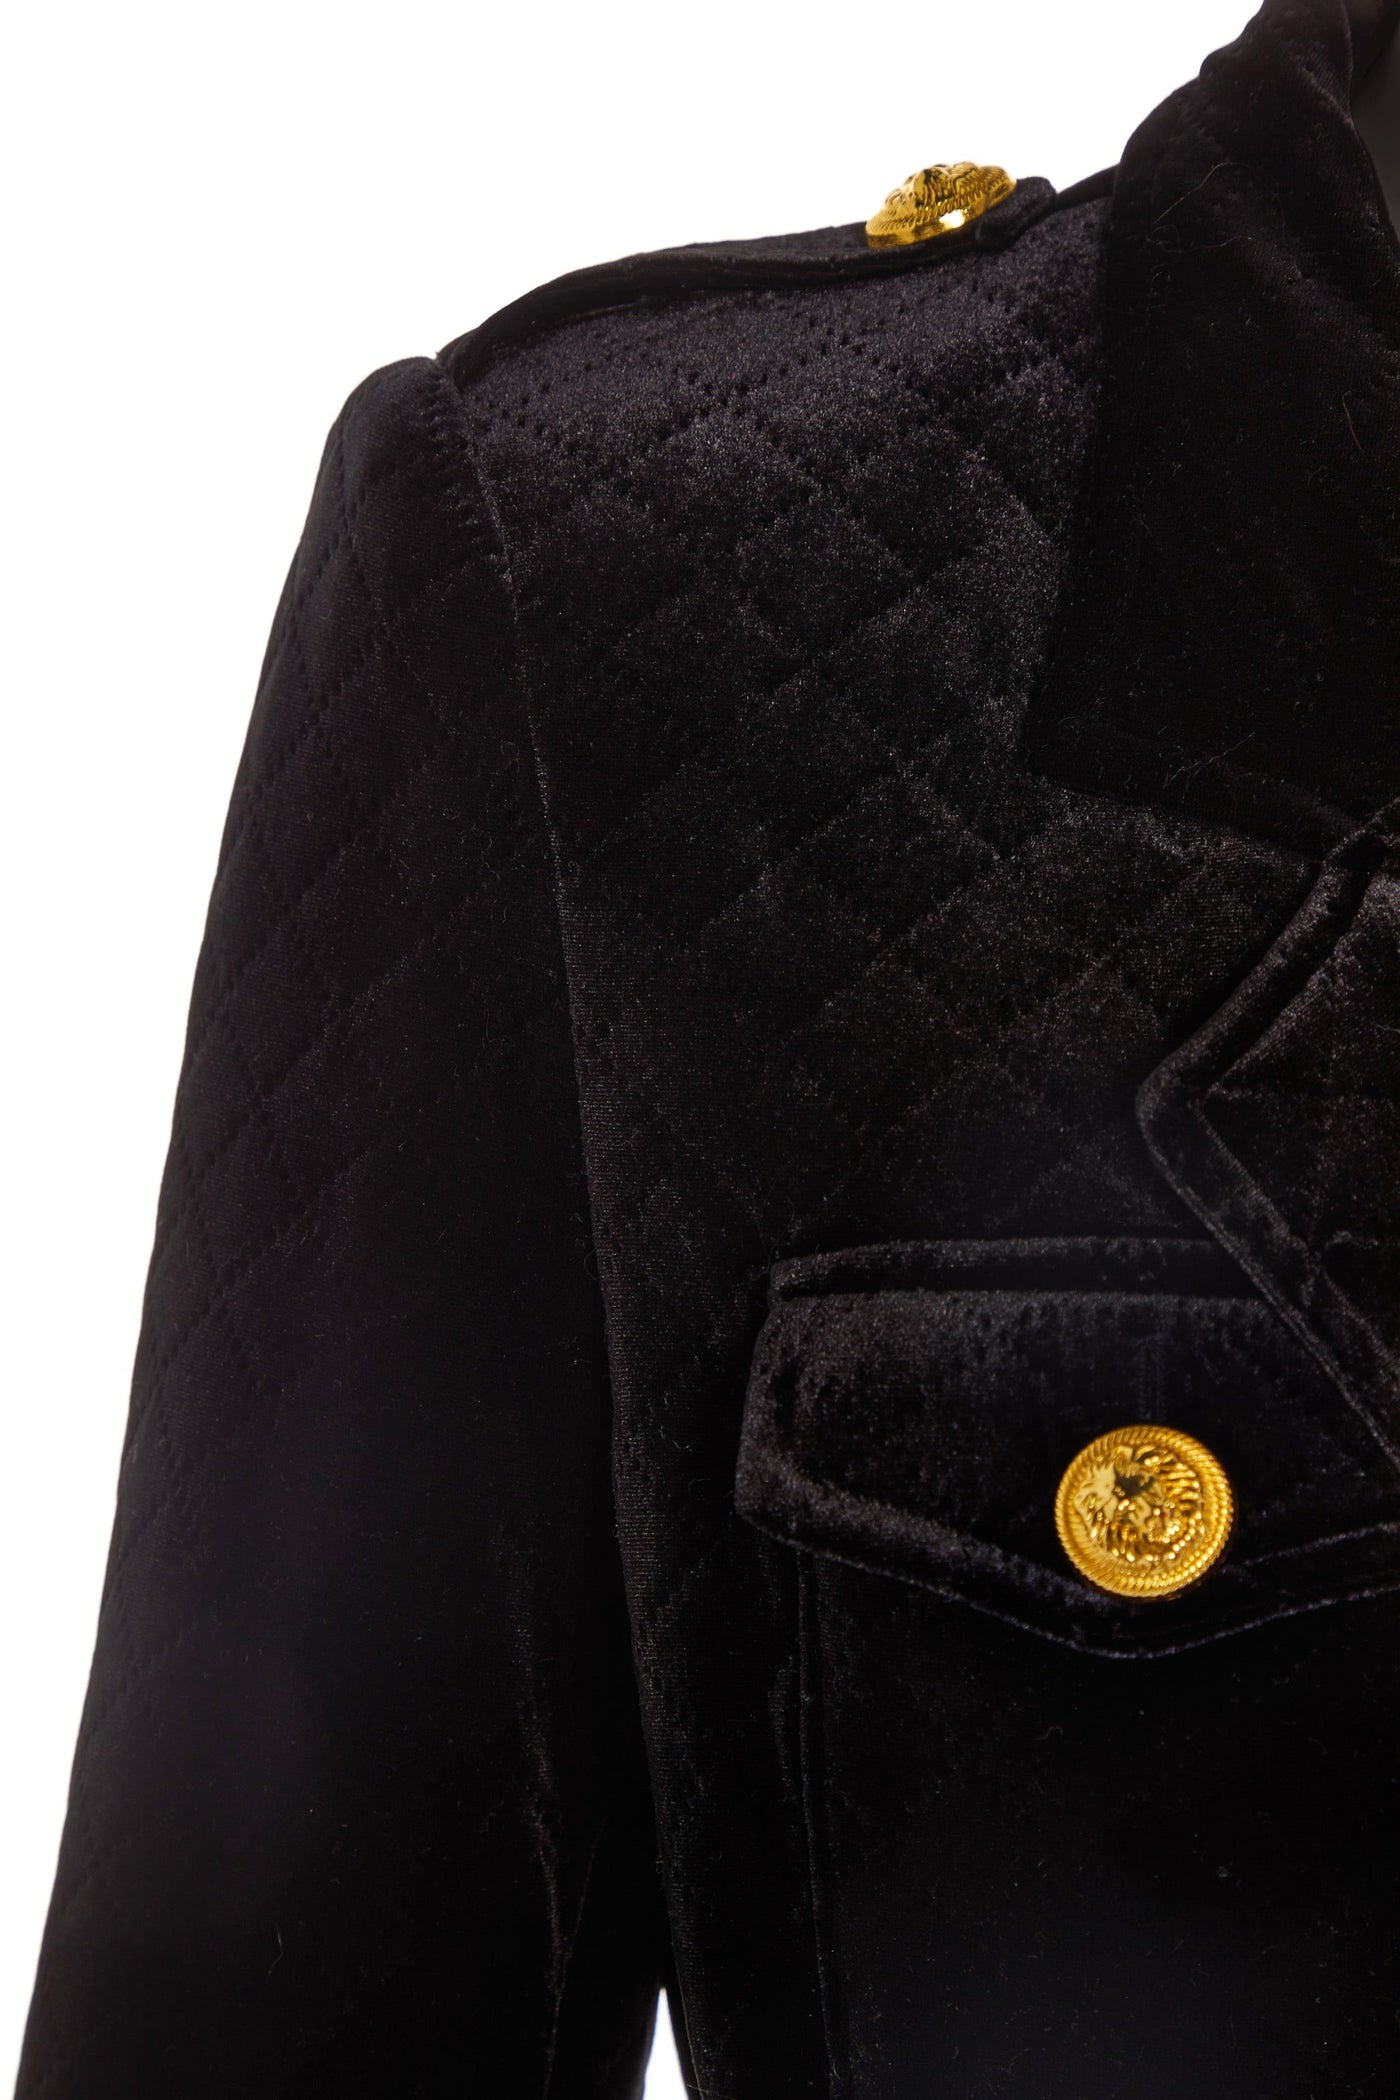 #49 Chelsea Coat - SAMPLE PIECE - SIZE XS (FITS UK 8/10)